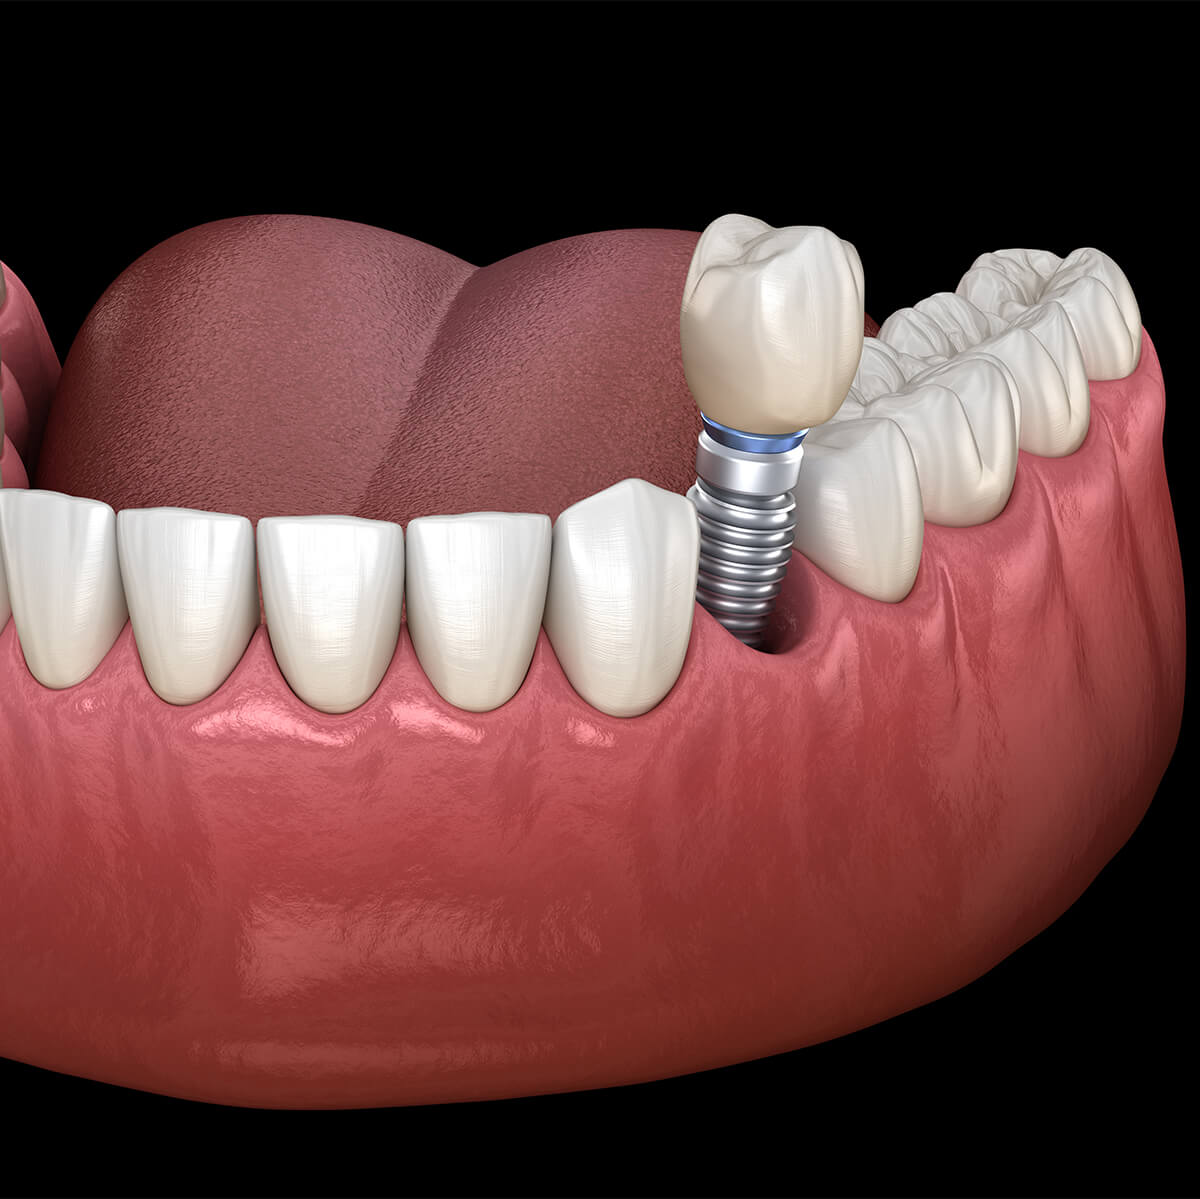 Types of Dental Implants in Fort Lauderdale FL Area